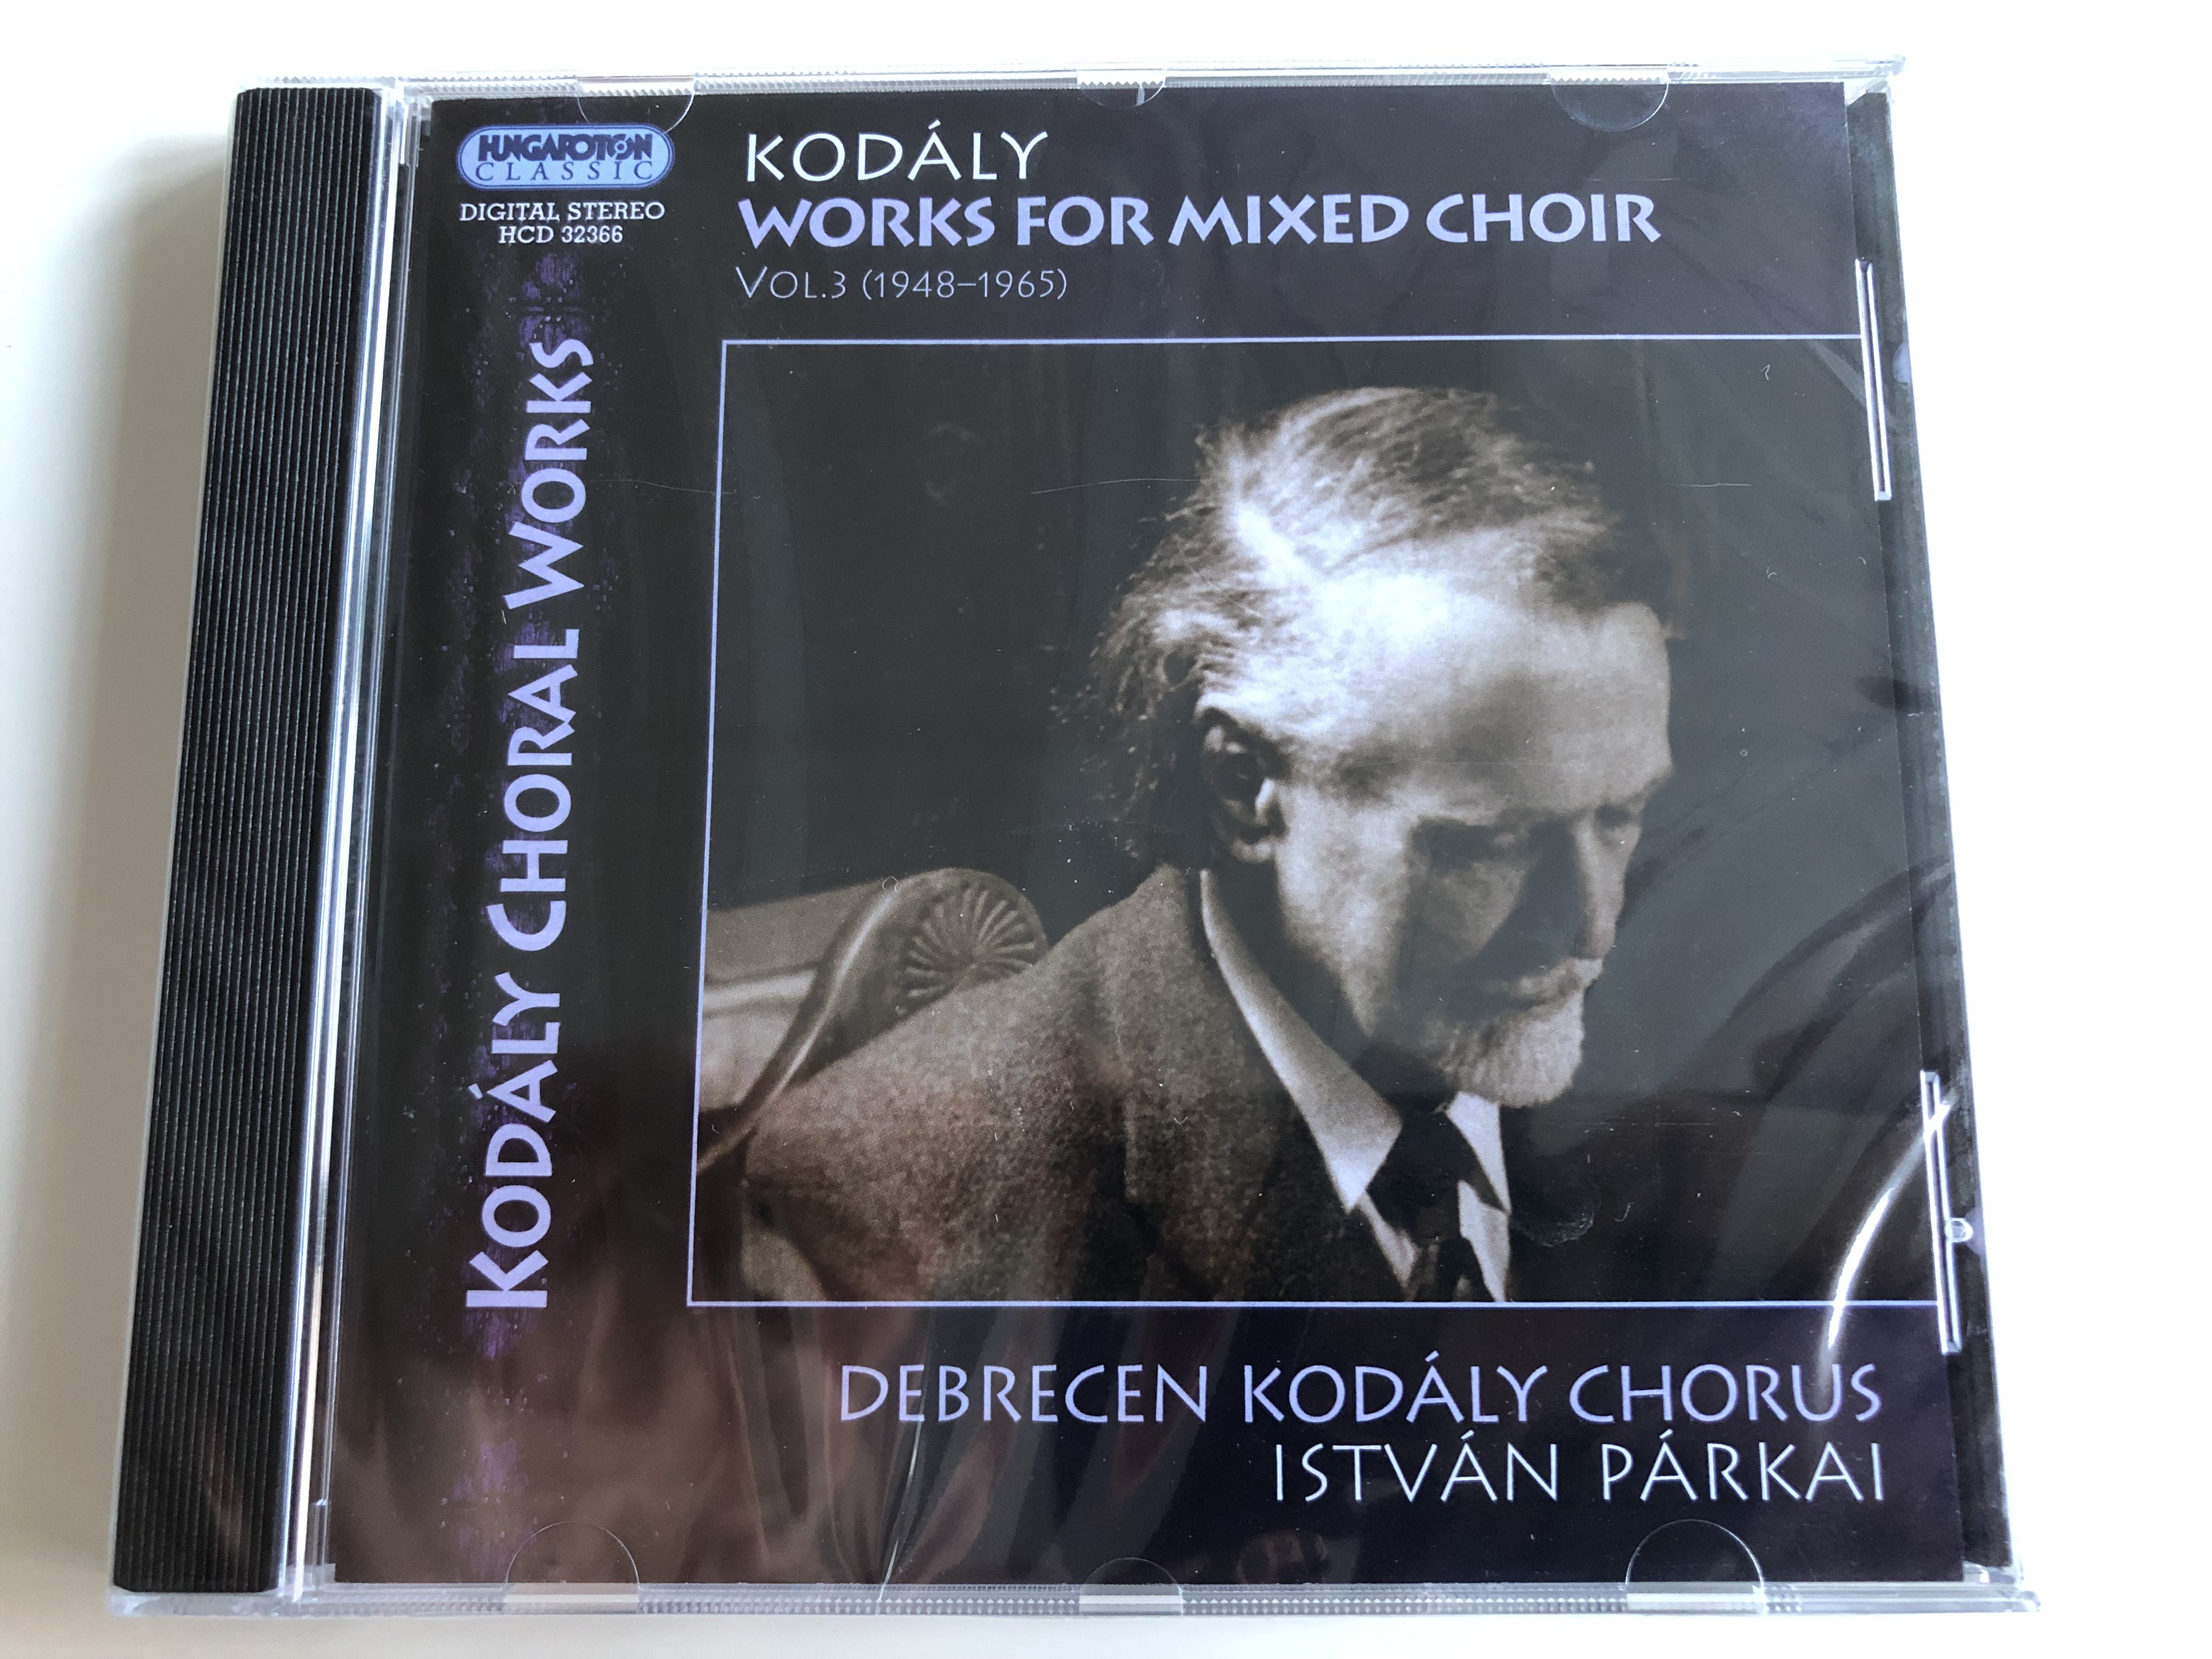 kod-ly-works-for-mixed-choir-vol.-3-1948-1965-debrecen-kodaly-chorus-istvan-parkai-kodaly-choral-works-hungaroton-classic-audio-cd-2007-stereo-hcd-32366-1-.jpg